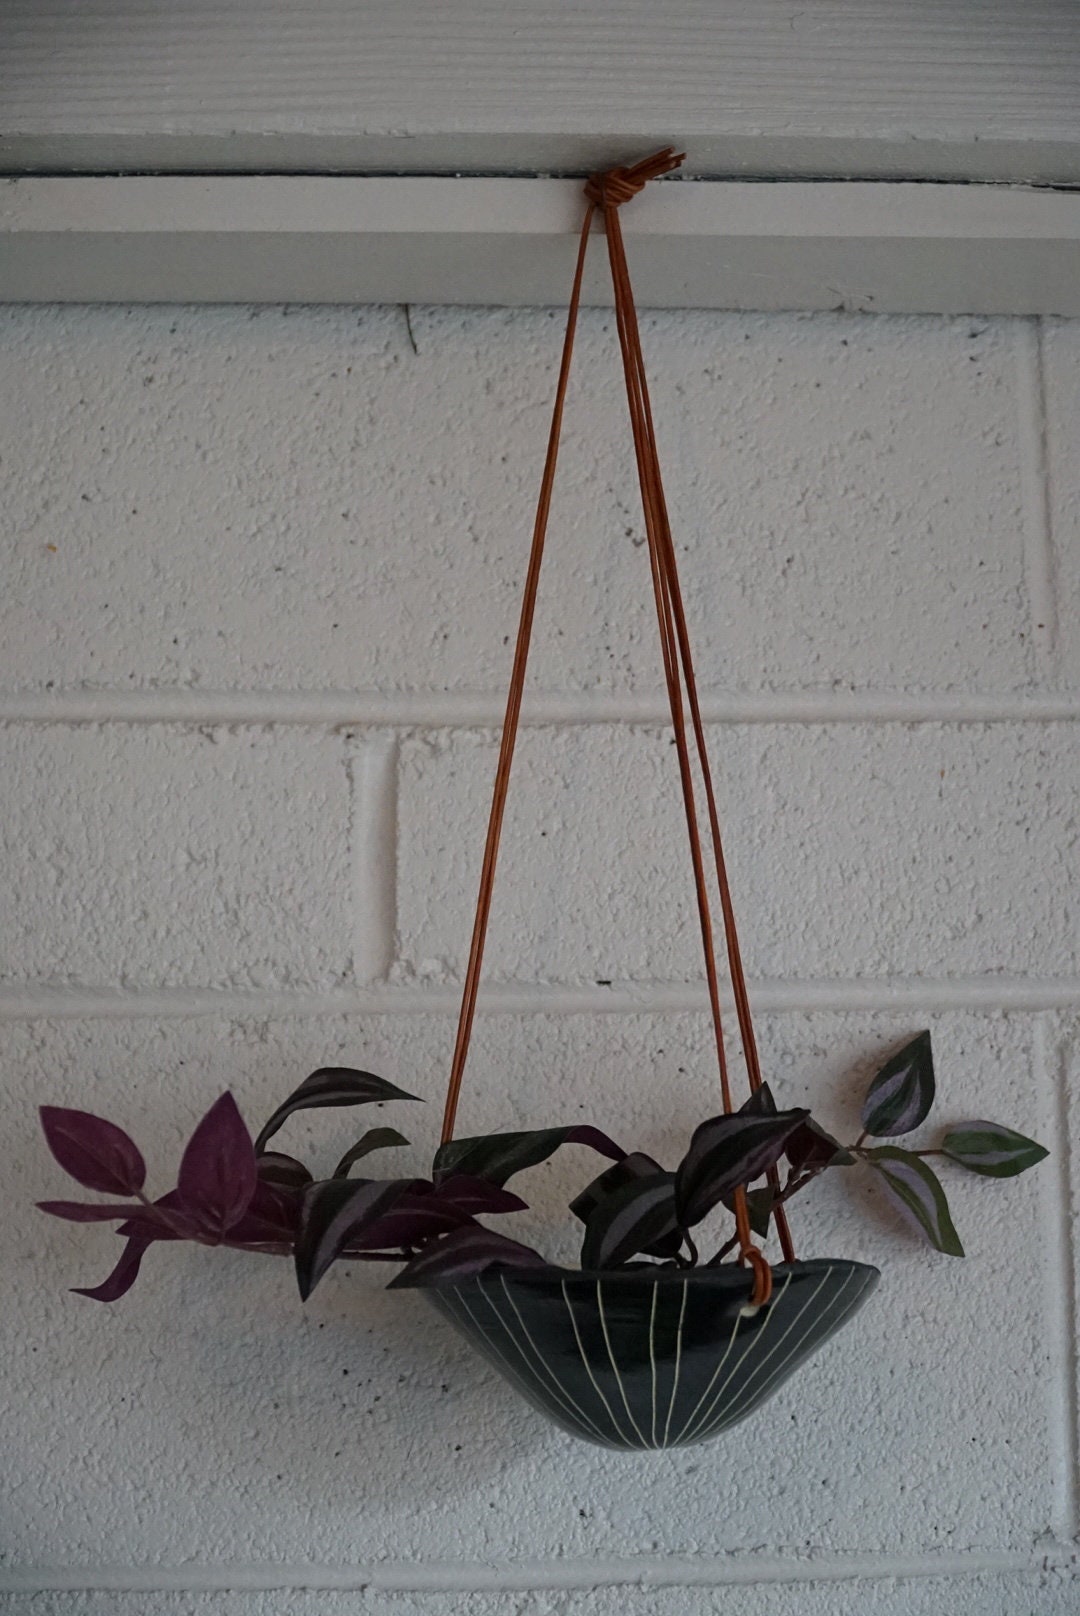 Black & White Glazed Mini Hanging Planter w/ "Vertical Line" Design - Hanging Pot w/ Carving - Succulent, Cactus, Herb, Air Plant - Housewarming